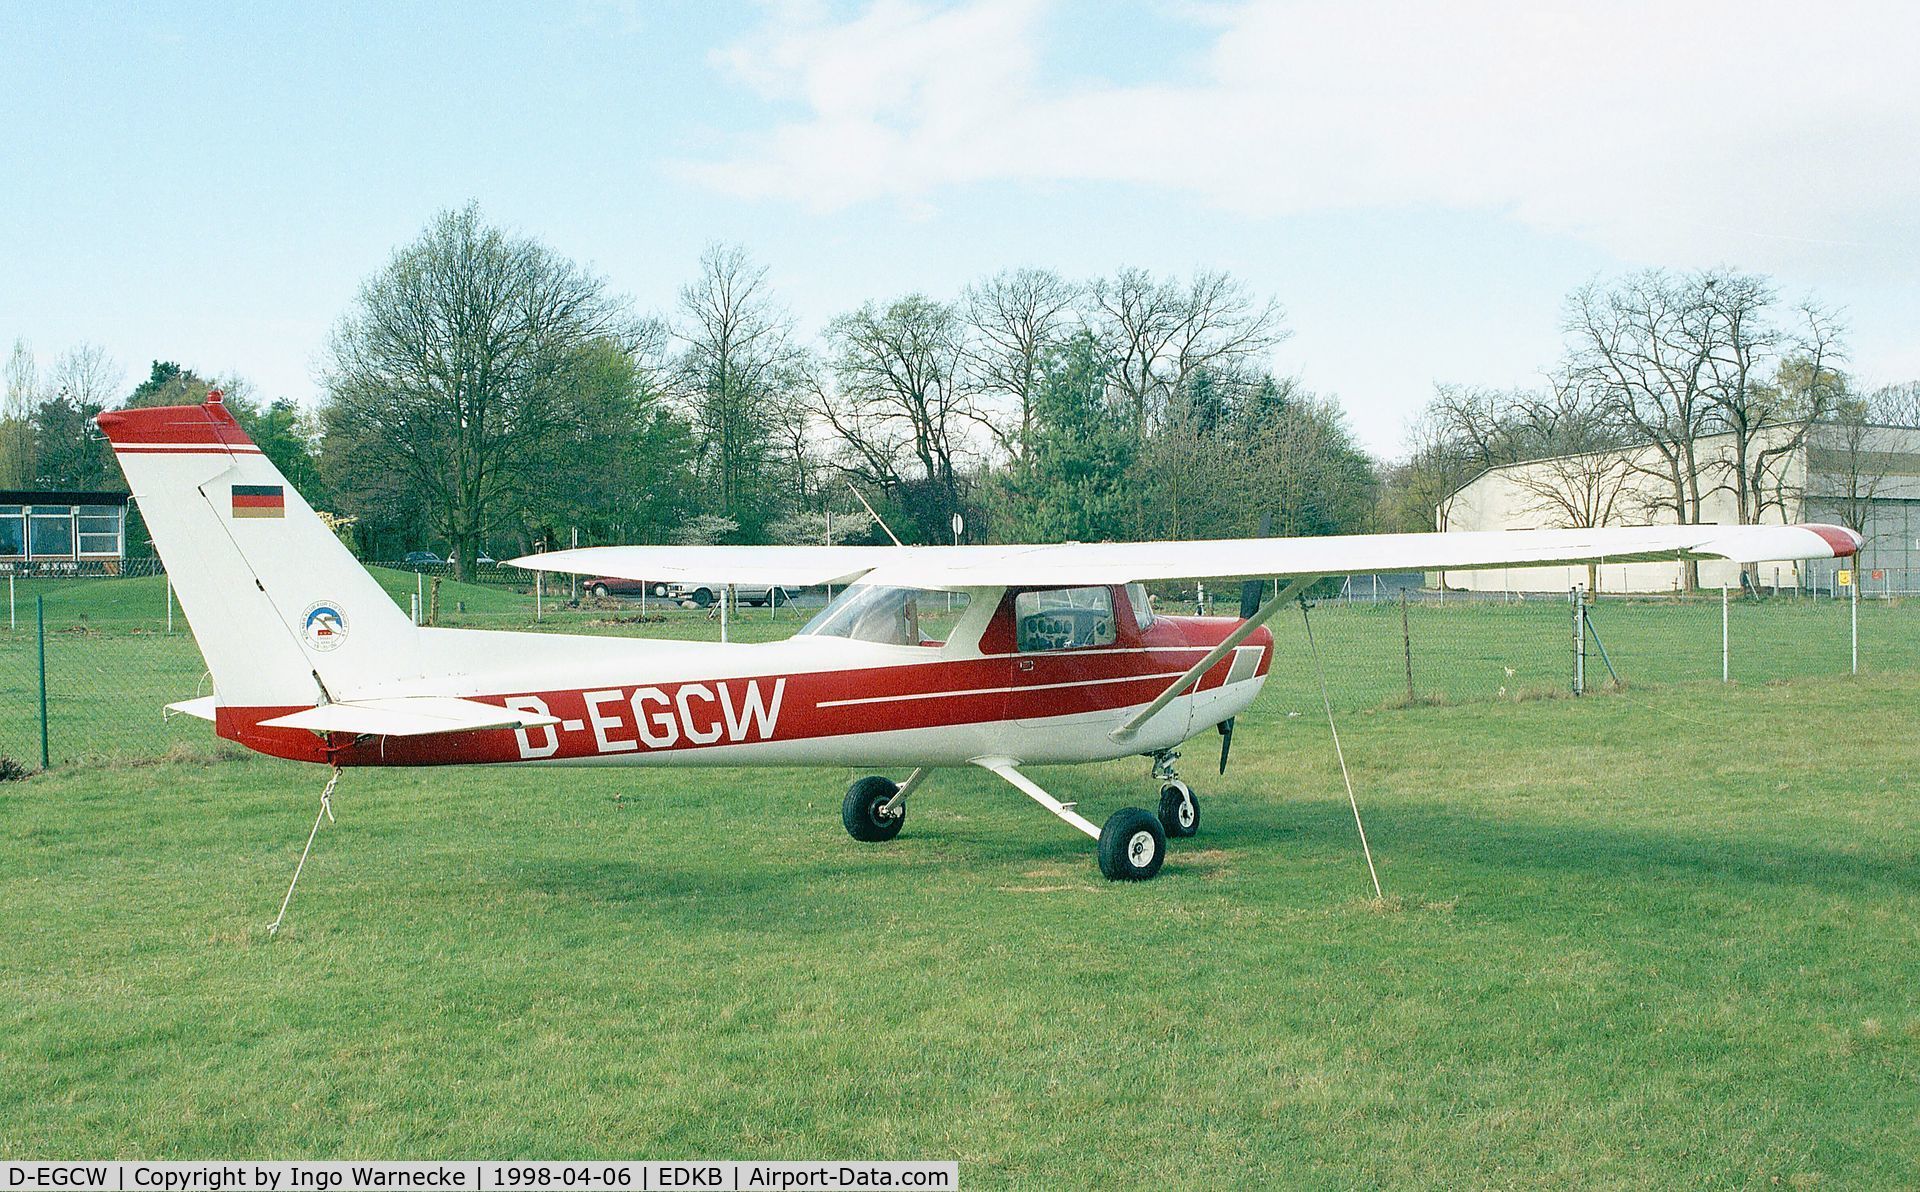 D-EGCW, Reims F152 C/N 1691, Cessna (Reims) F152 at Bonn-Hangelar airfield